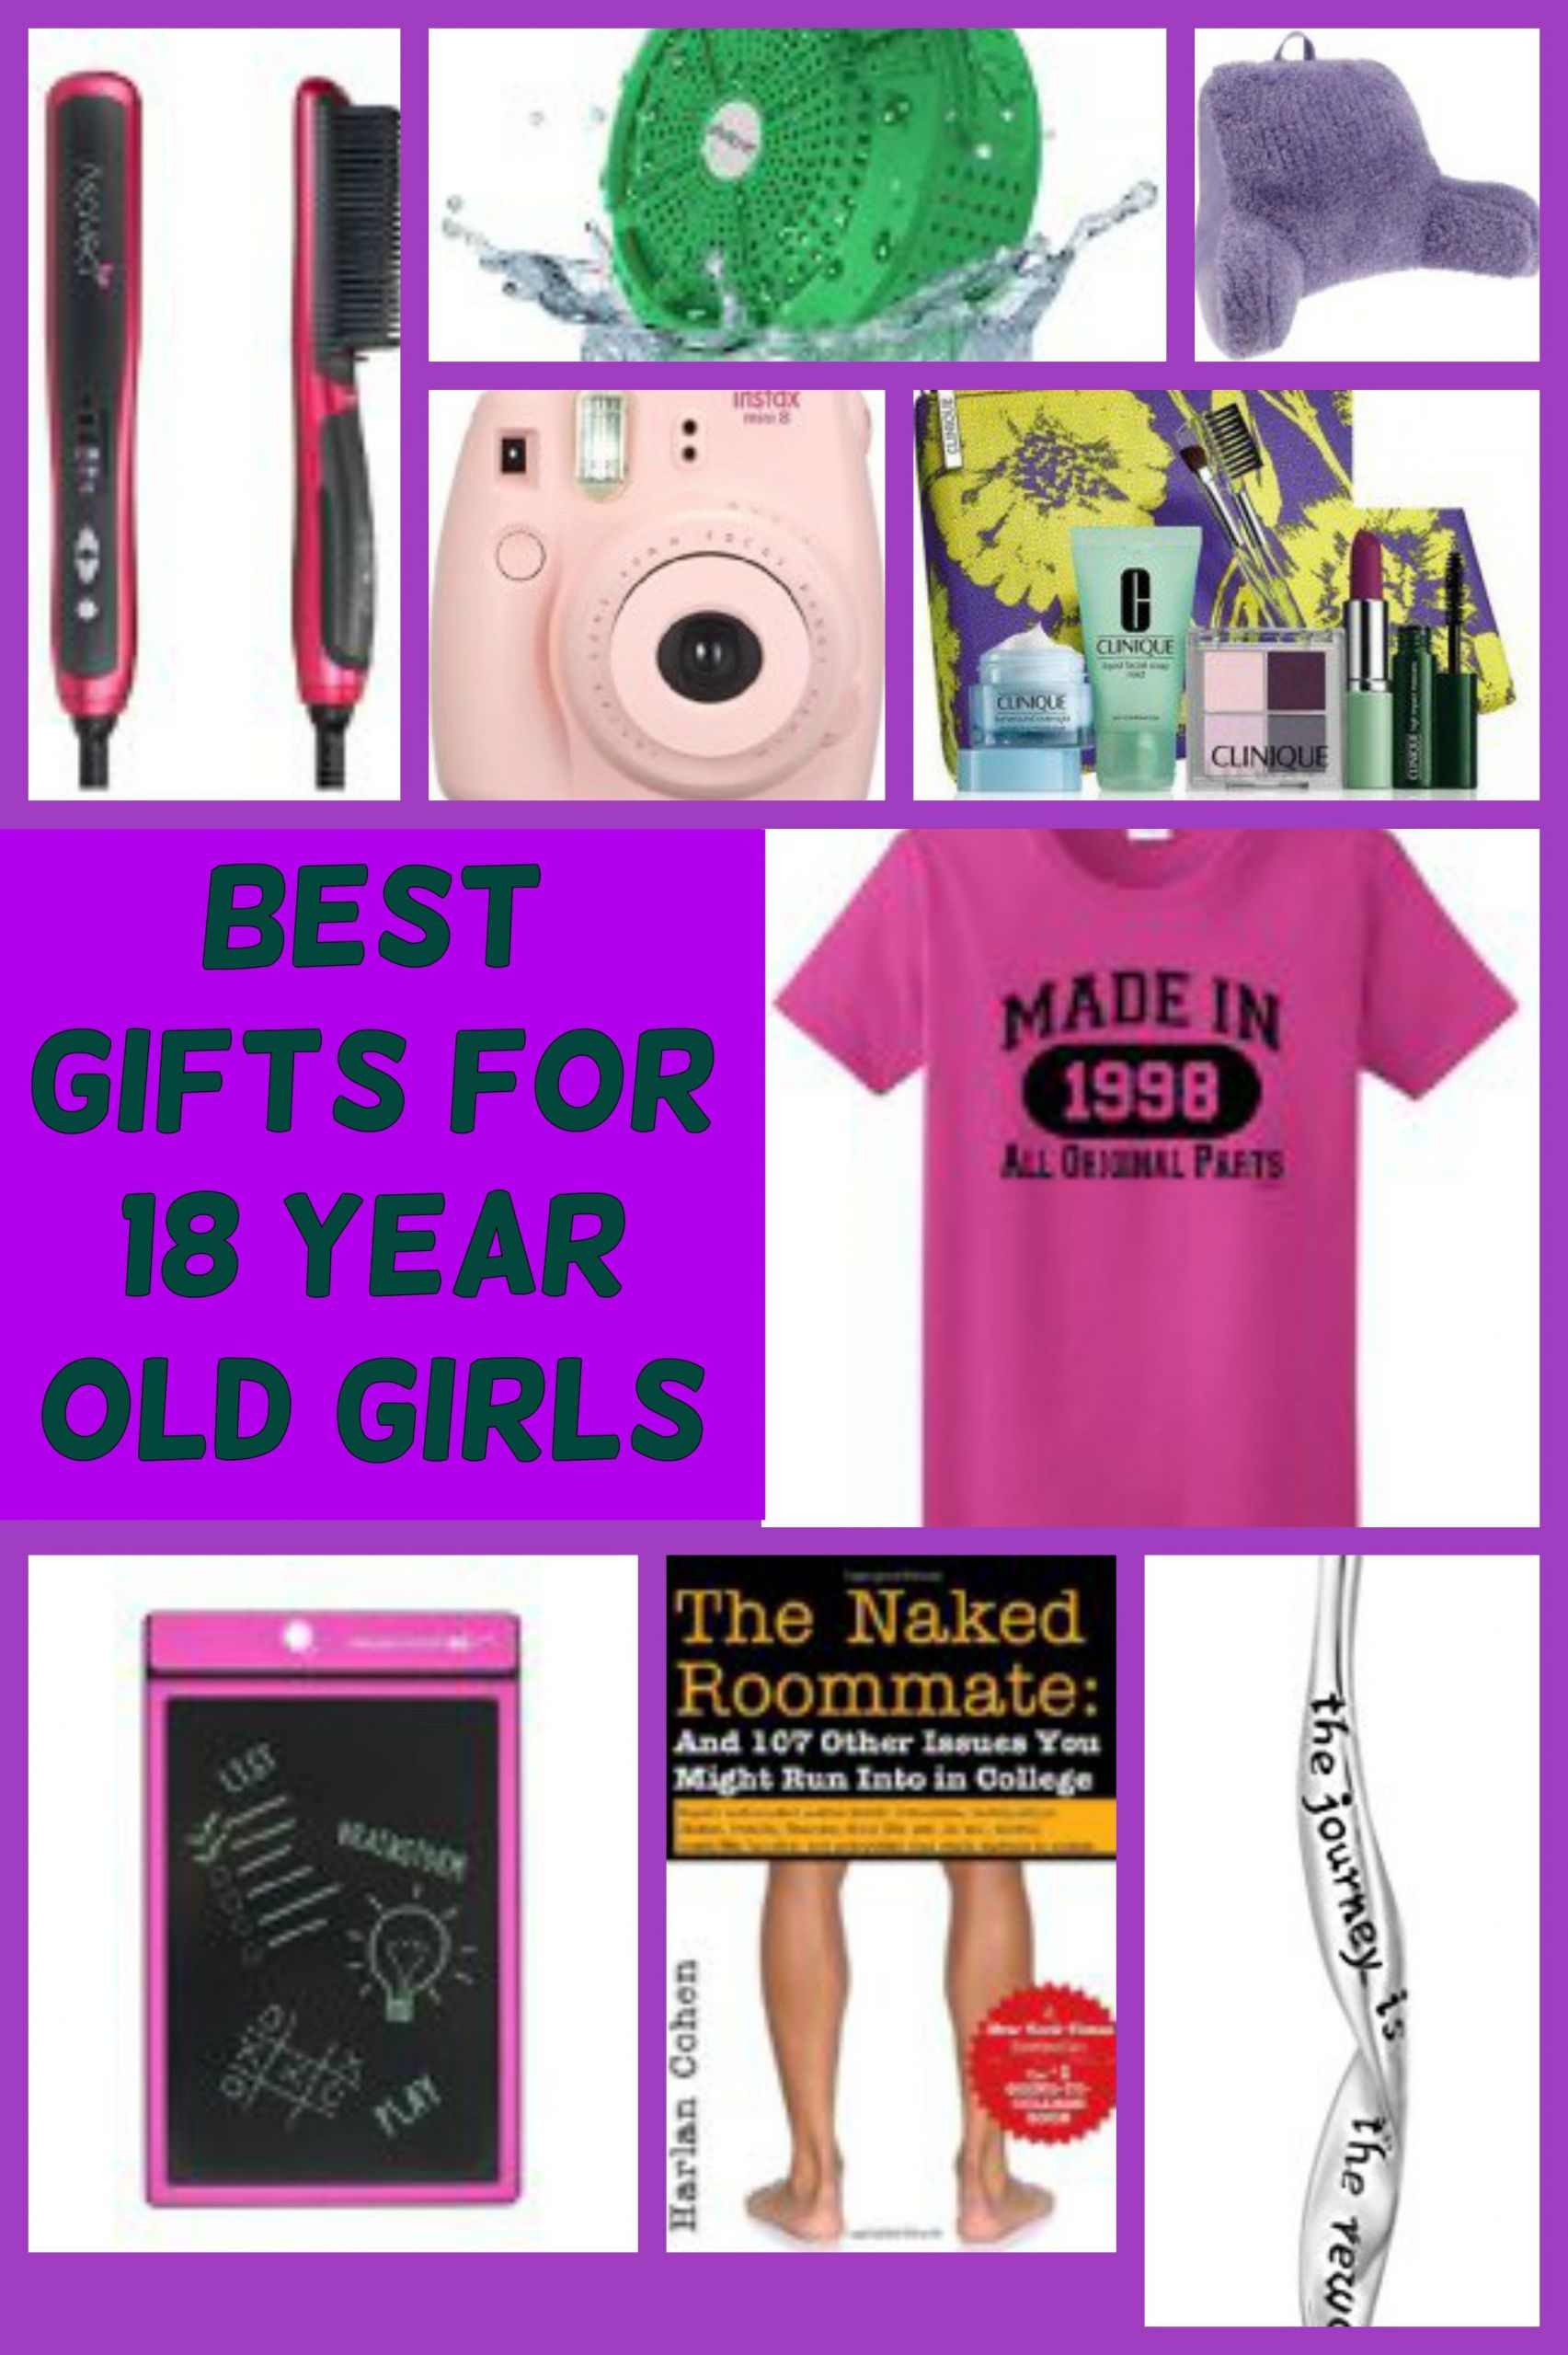 Gift Ideas For 18 Year Old Boyfriend
 Popular Birthday and Christmas Gift Ideas for 18 Year Old